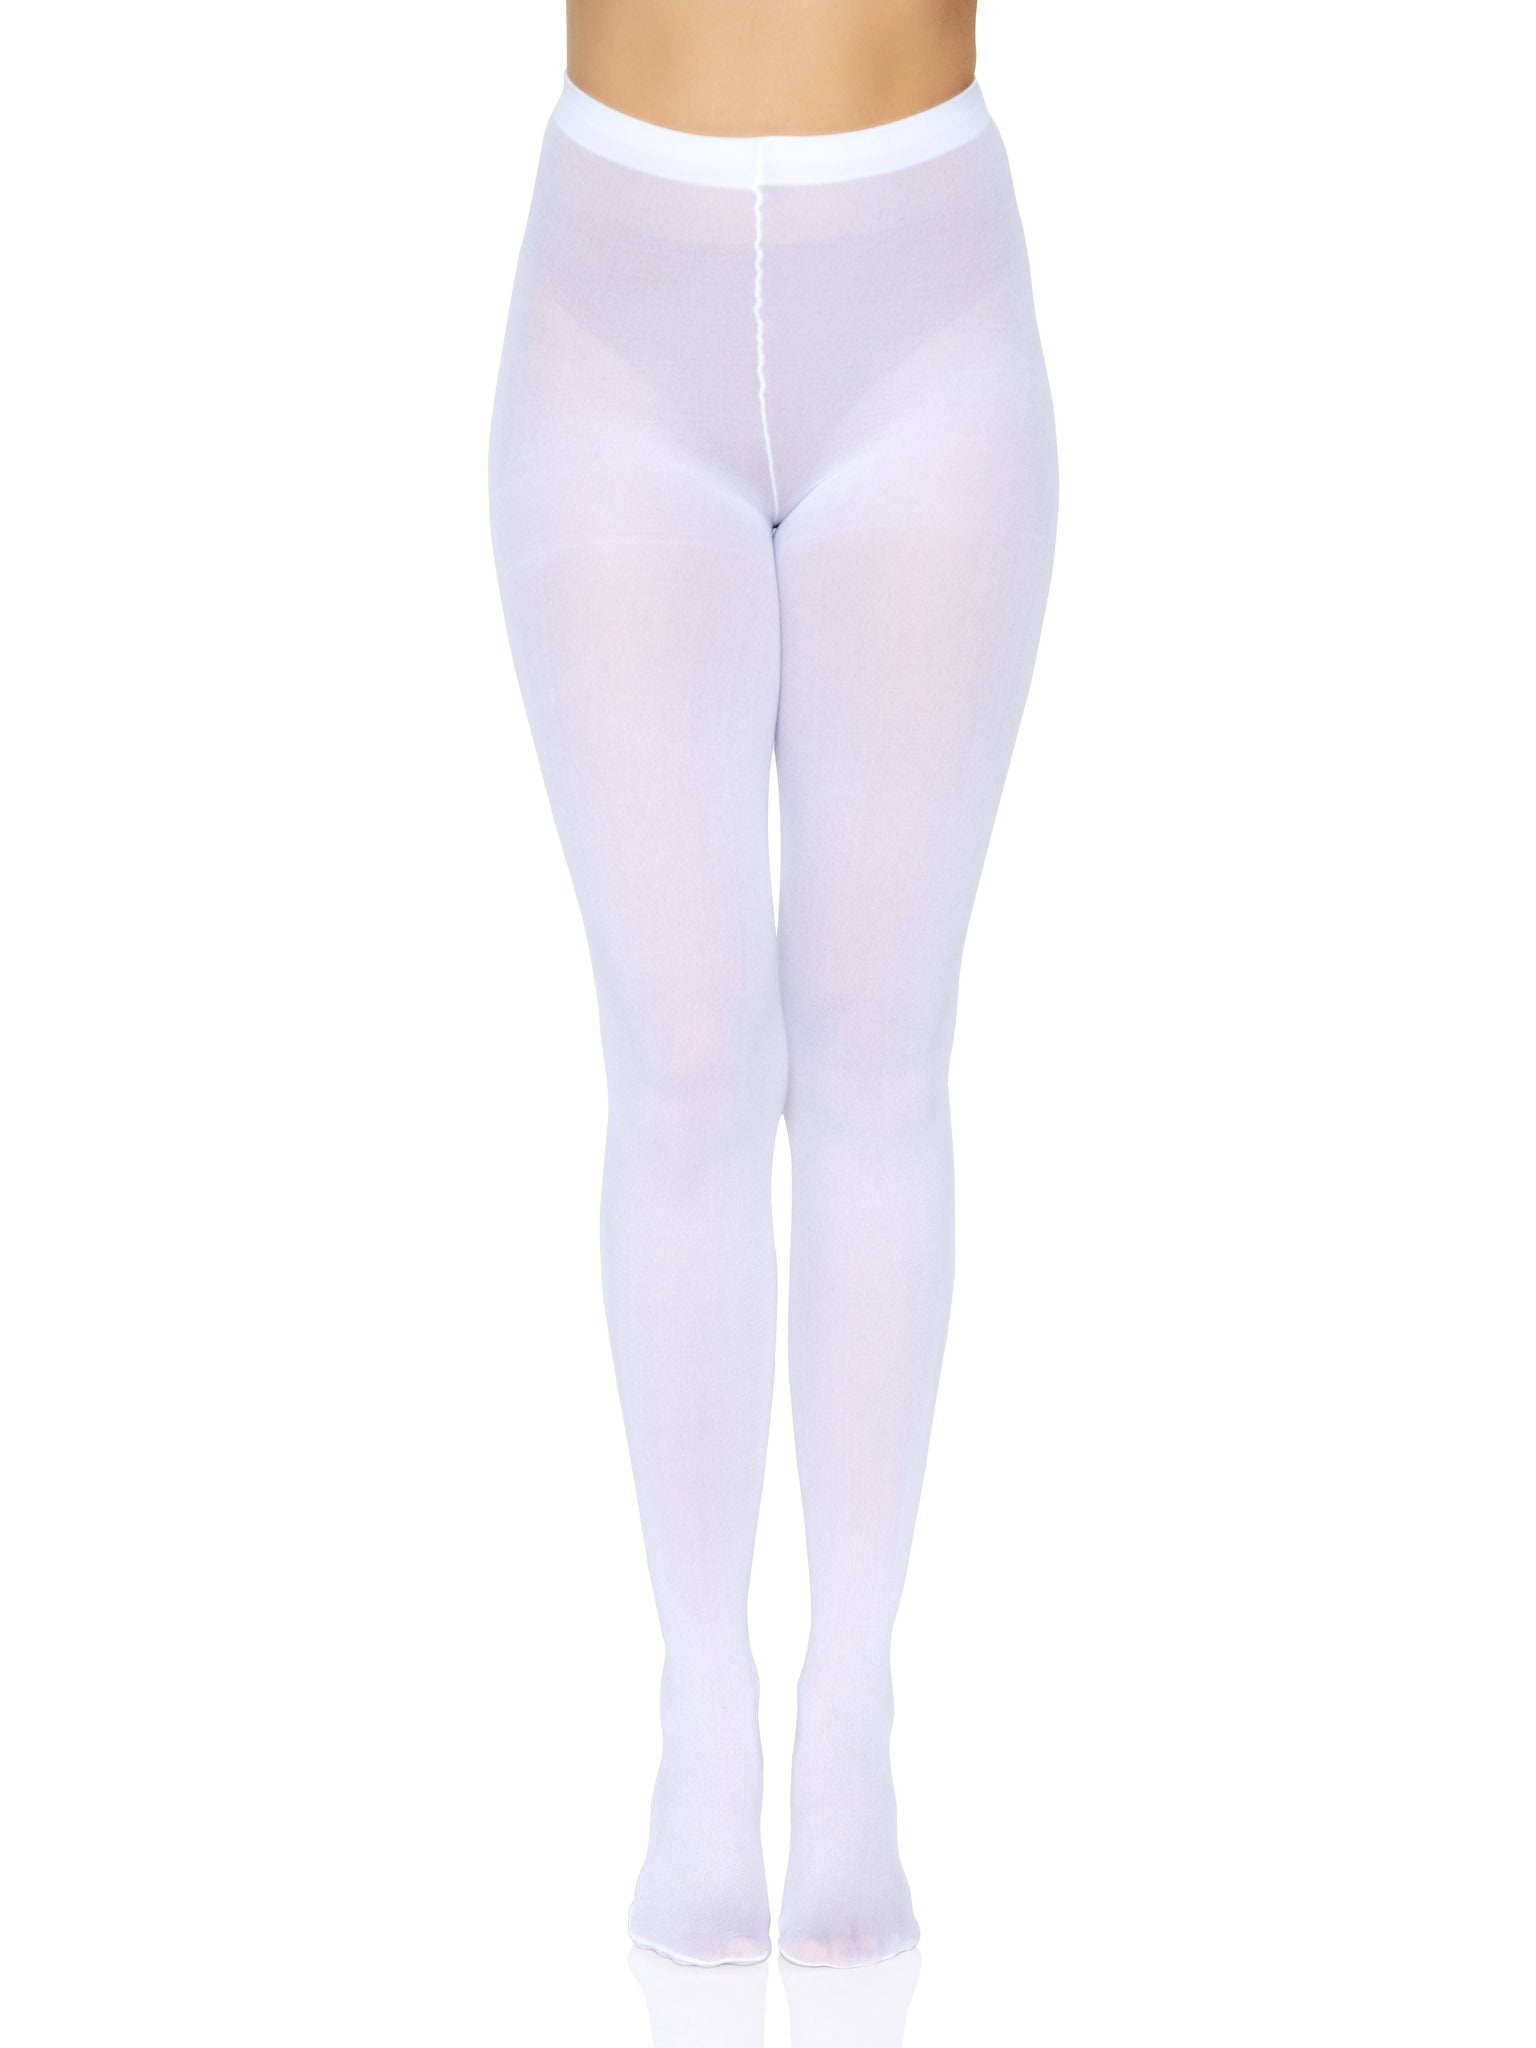 Women's, Nylon Tights Pantyhose. Hosiery. Leg Avenue 7300 White. –  Hollywood Exotic Shop